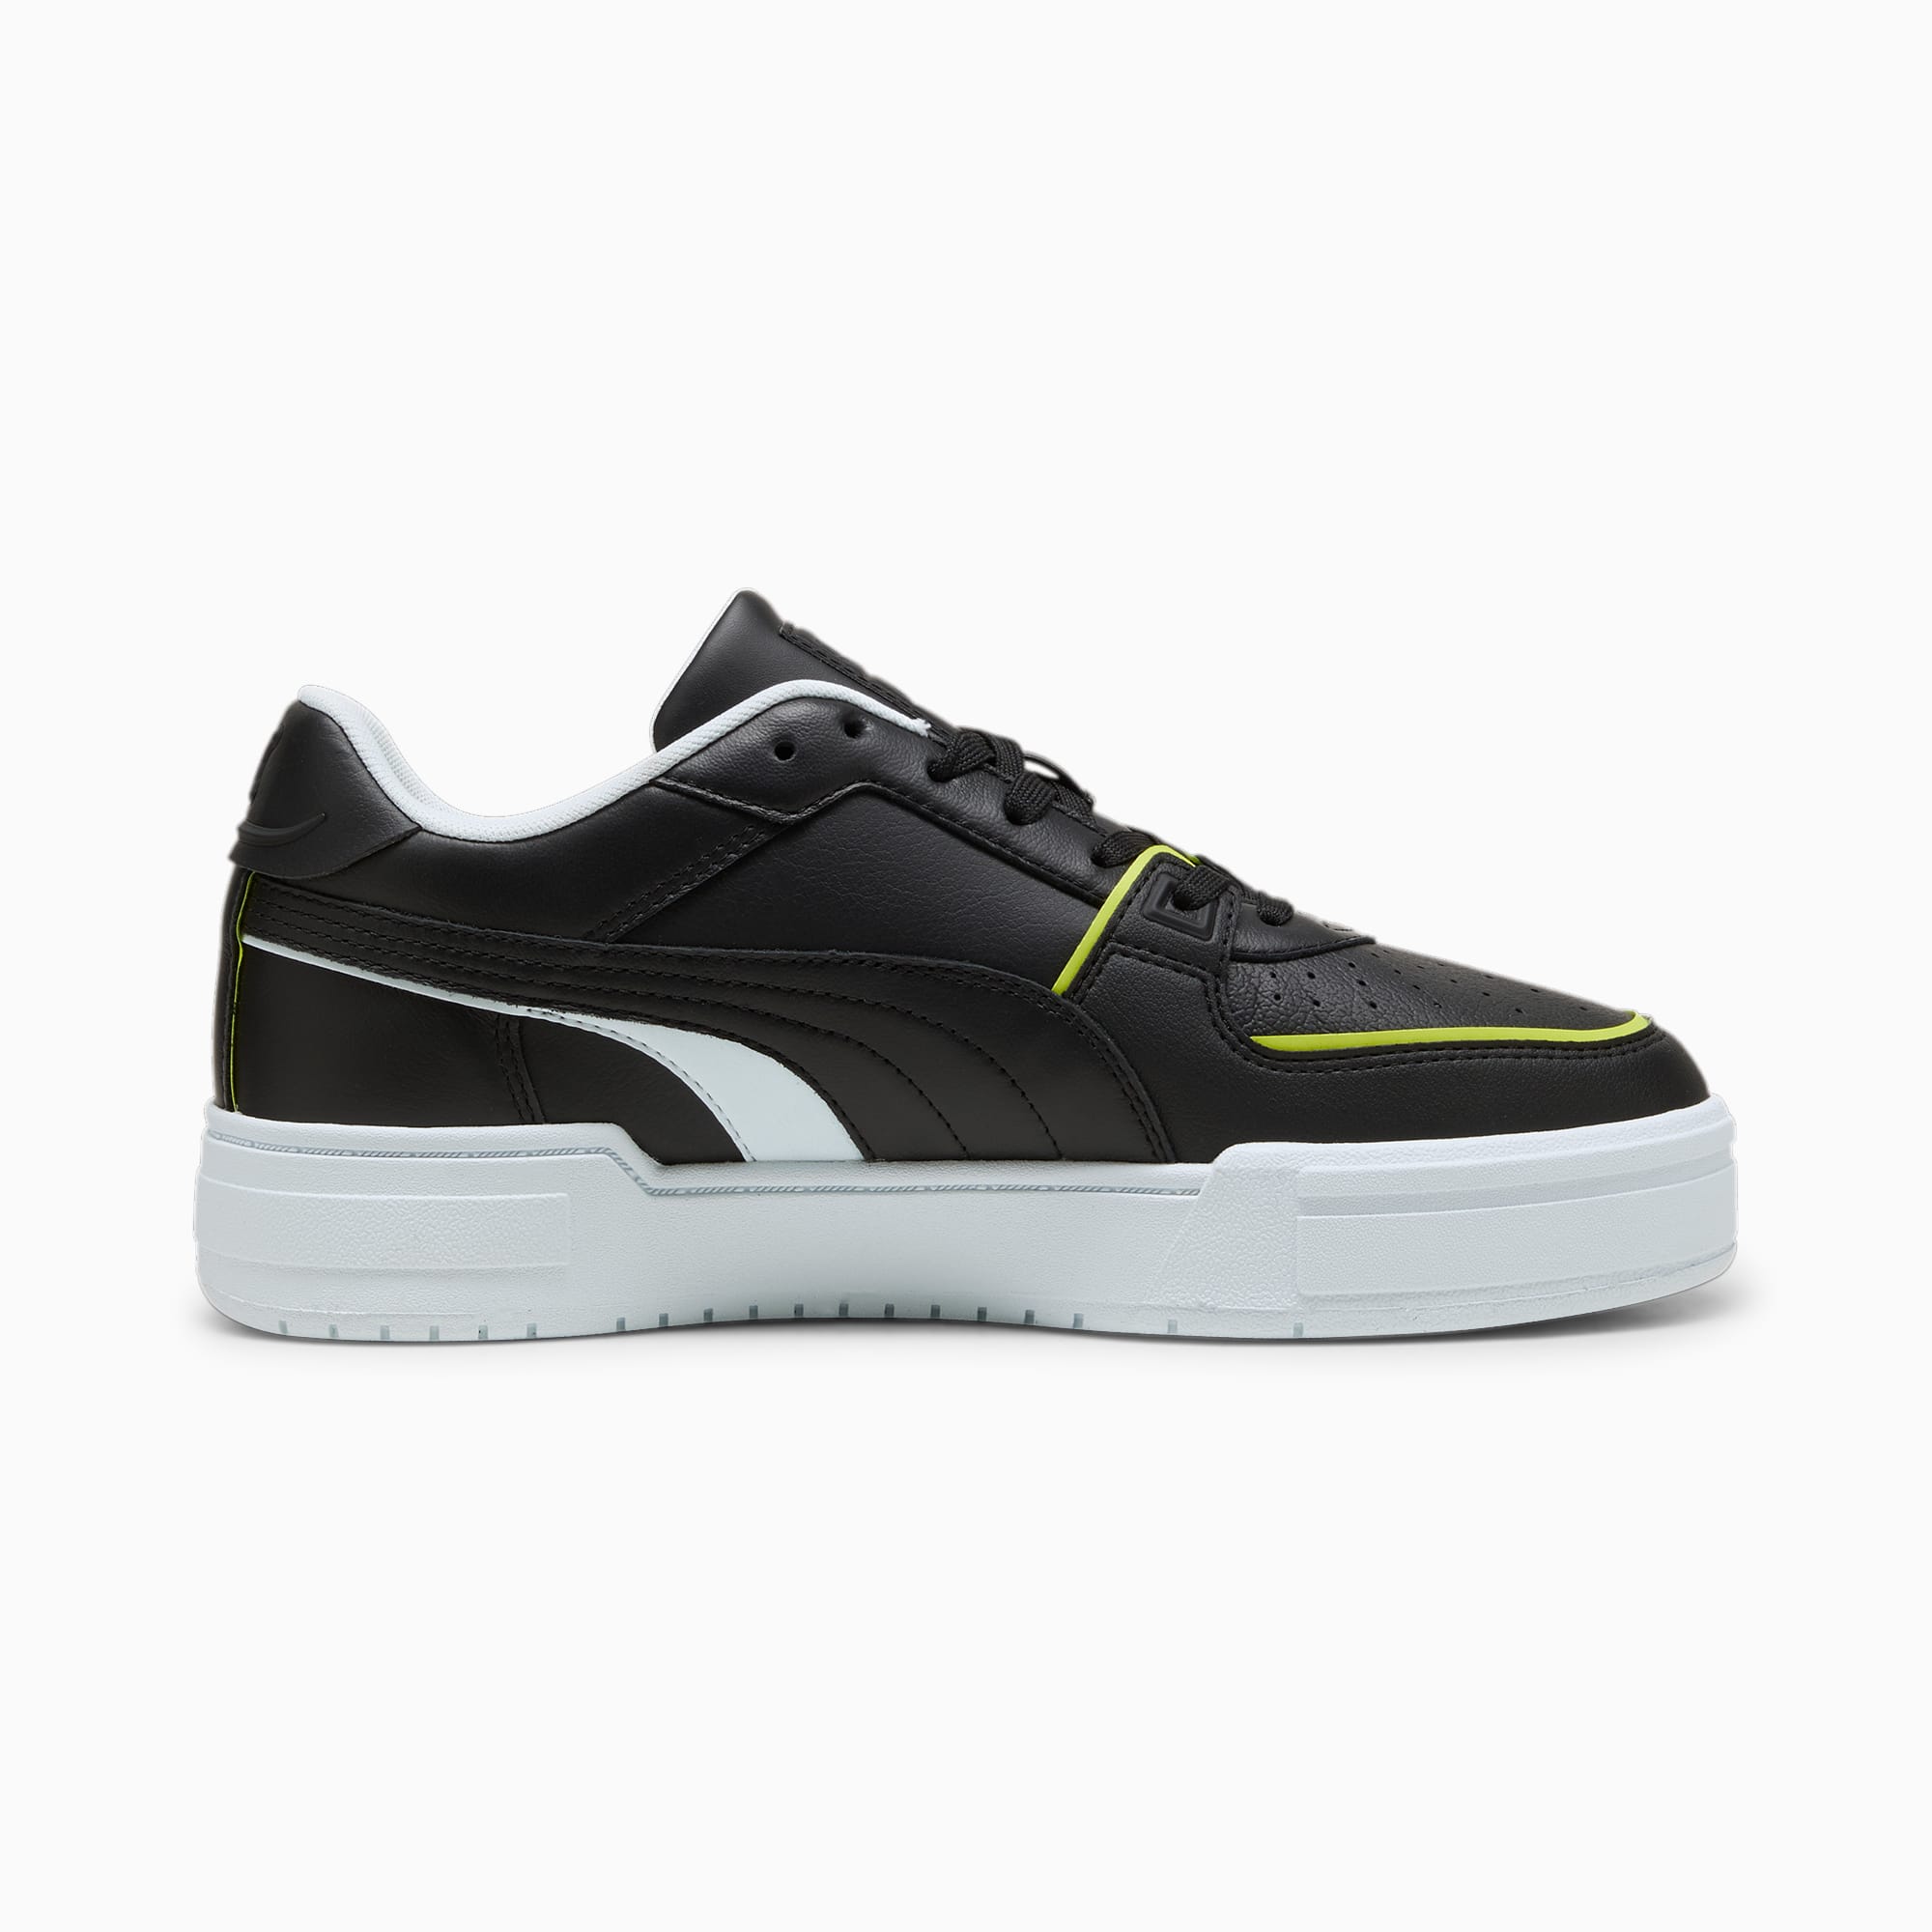 PUMA AMG CA Pro Sneakers Schuhe, Schwarz, Größe: 41, Schuhe